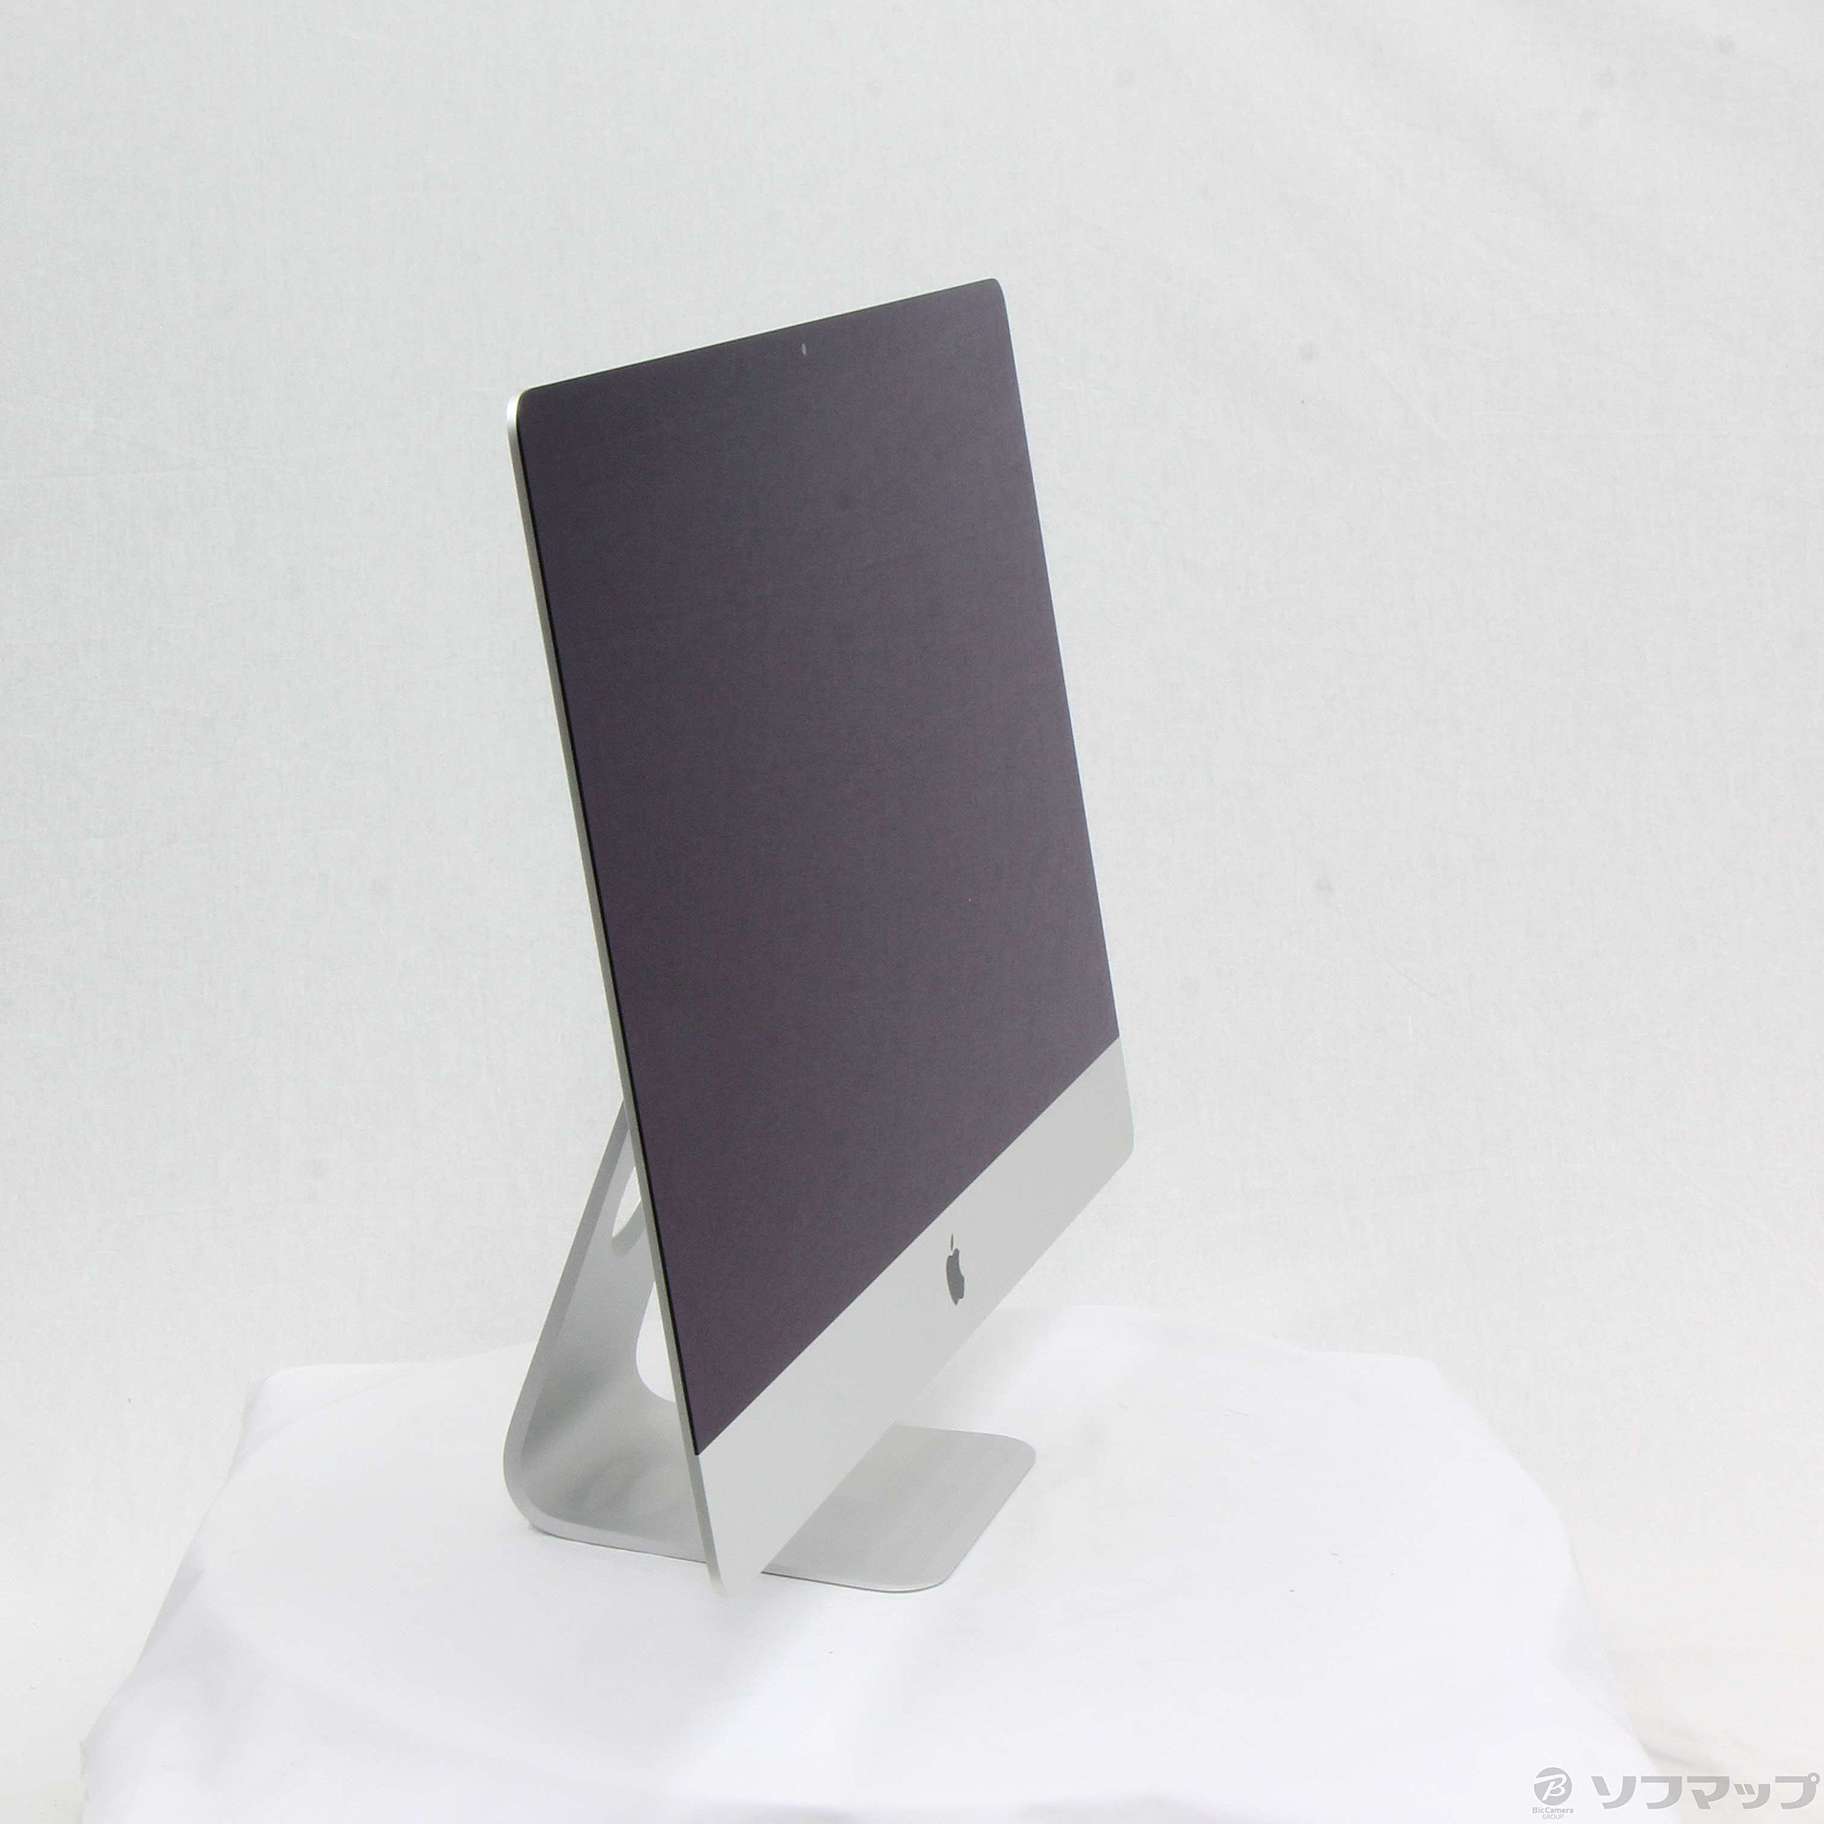 中古】iMac 27-inch Late 2013 ME088J／A Core_i5 3.2GHz 16GB HDD1TB